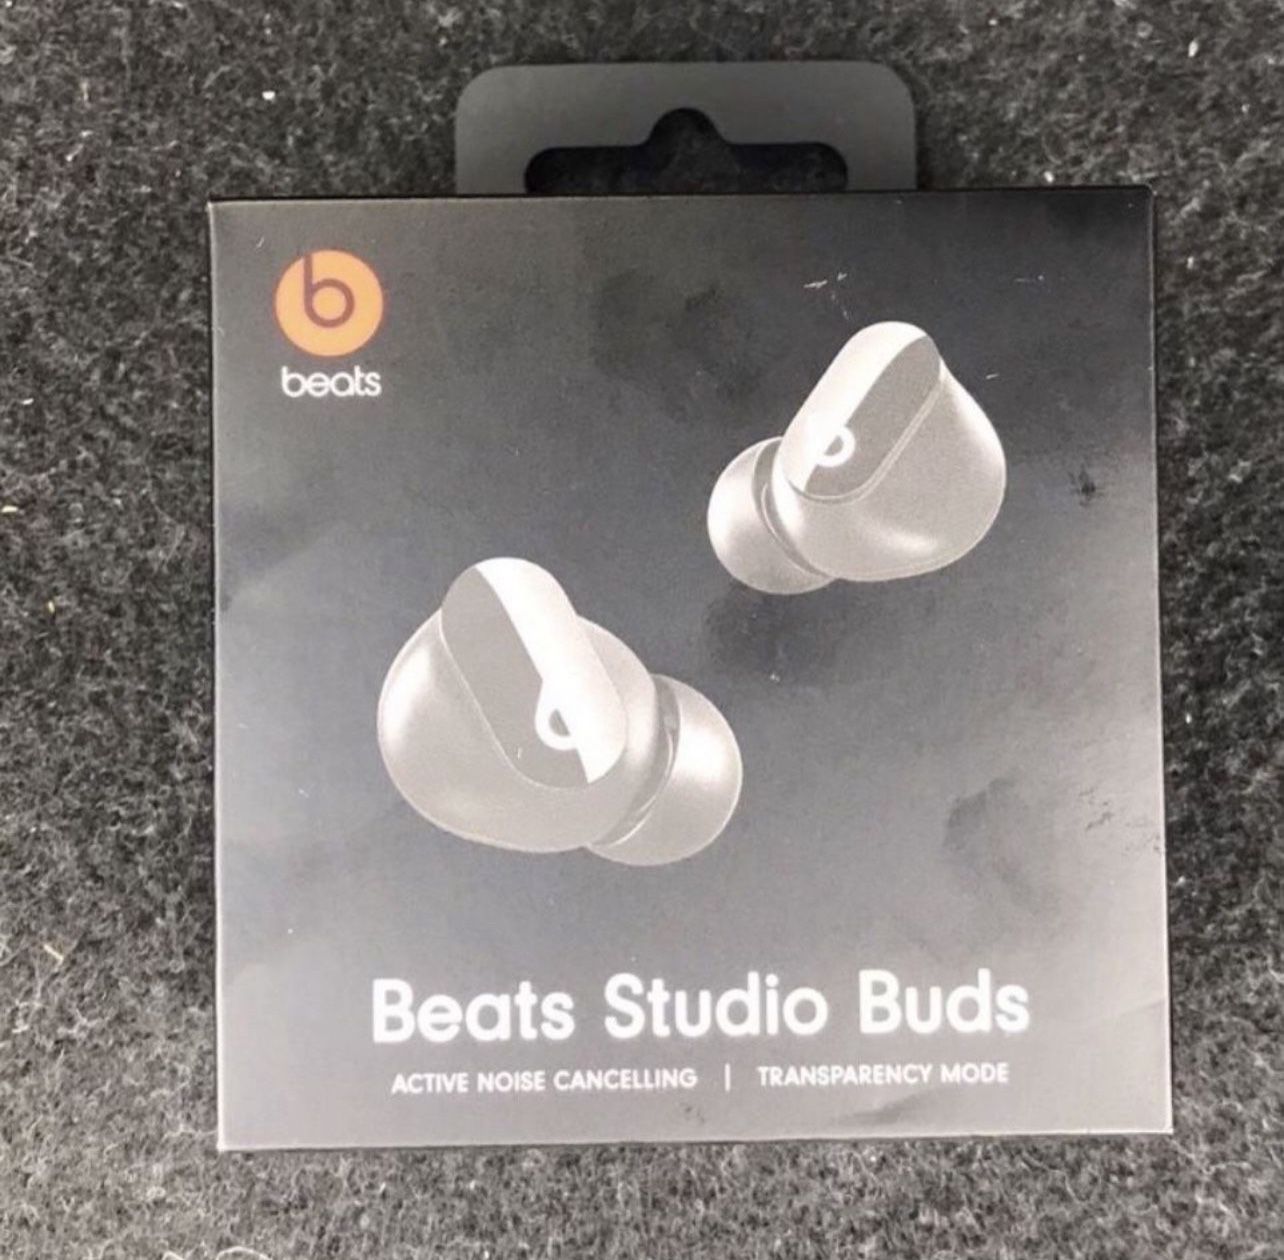 Beats by Dr. Dre - Beats Studio Buds Wireless Noise Cancelling Earphones